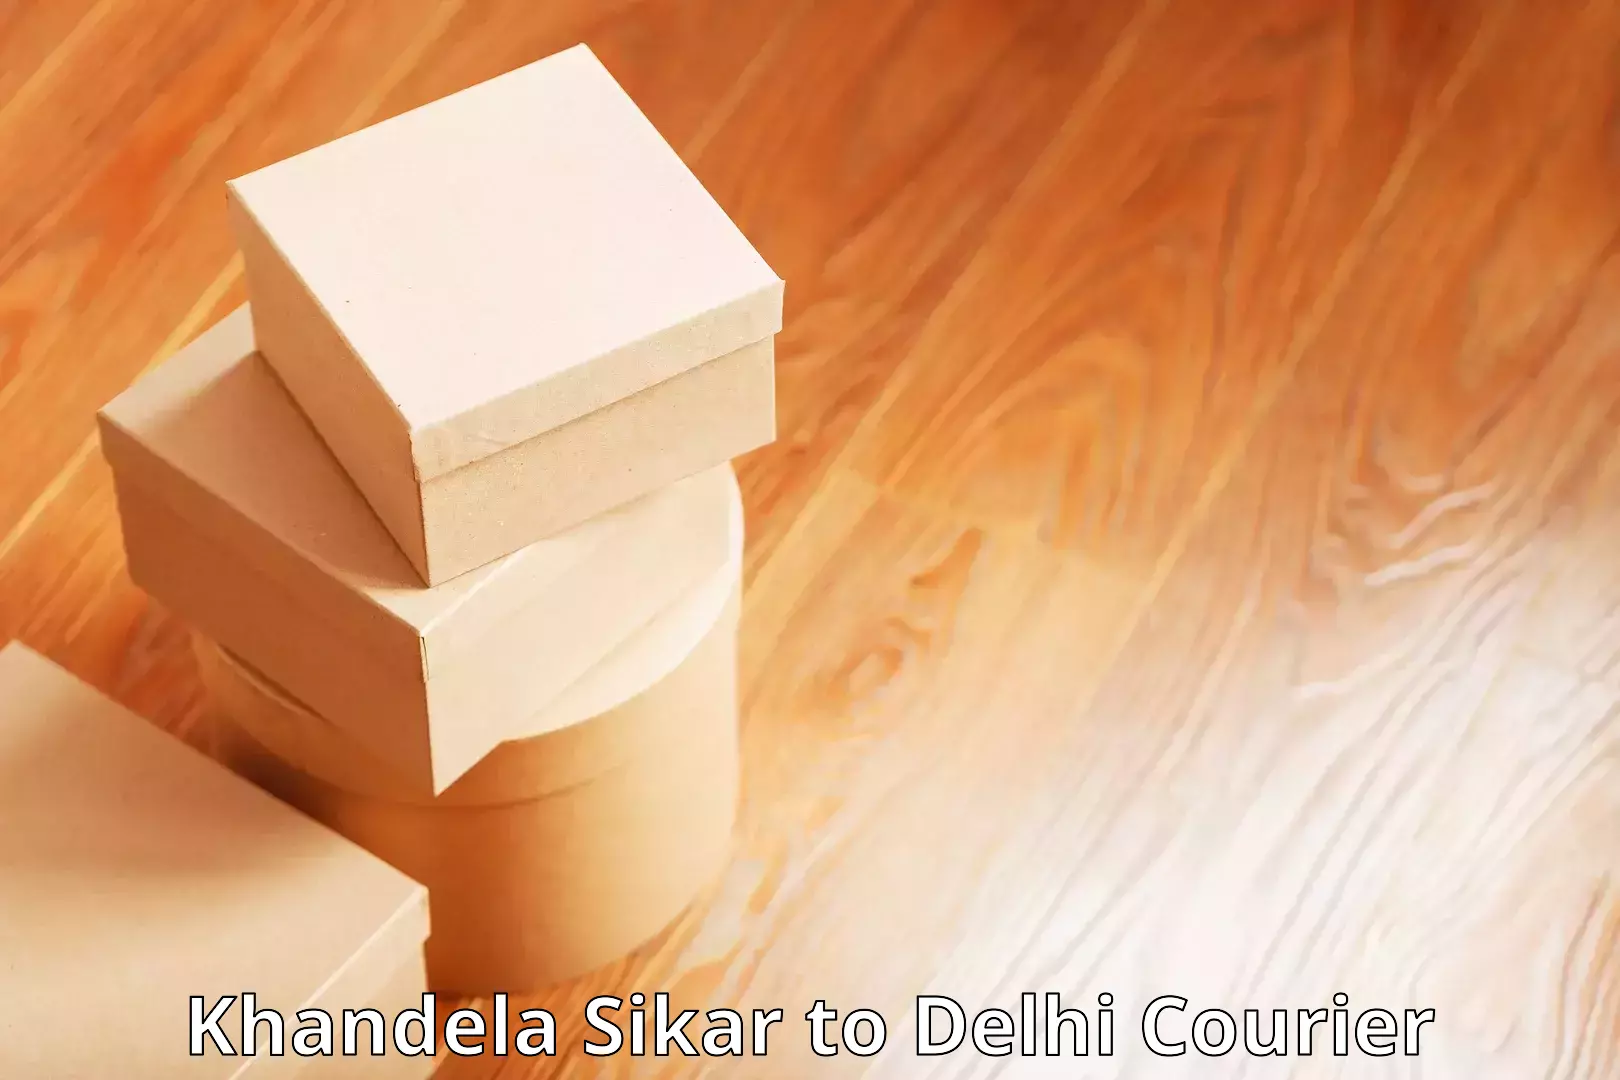 Cost-effective courier options Khandela Sikar to Delhi